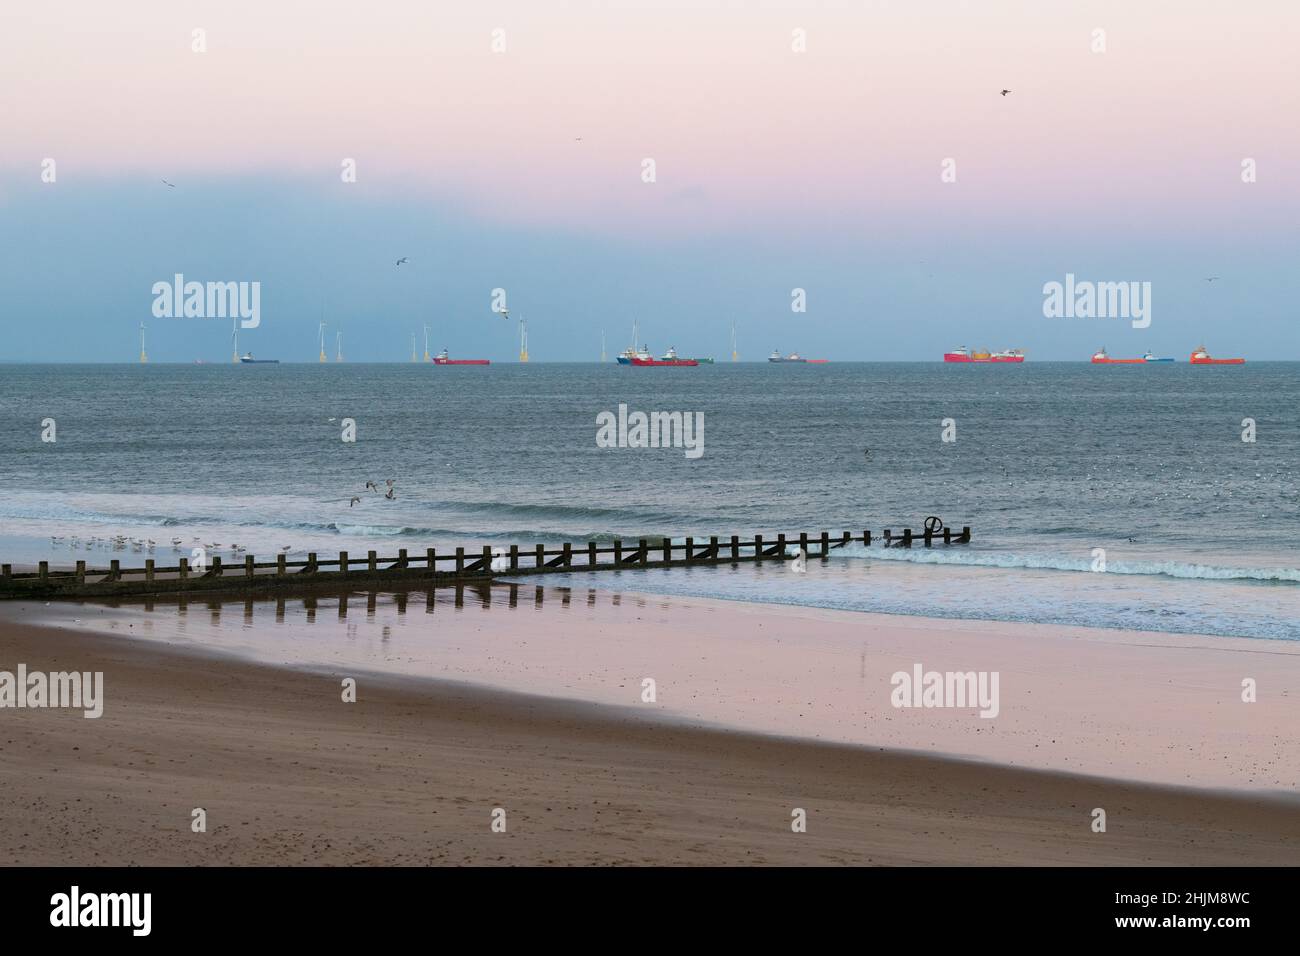 Aberdeen beach, offshore wind farm and supply vessels at sunset, Aberdeen, Scotland, UK Stock Photo